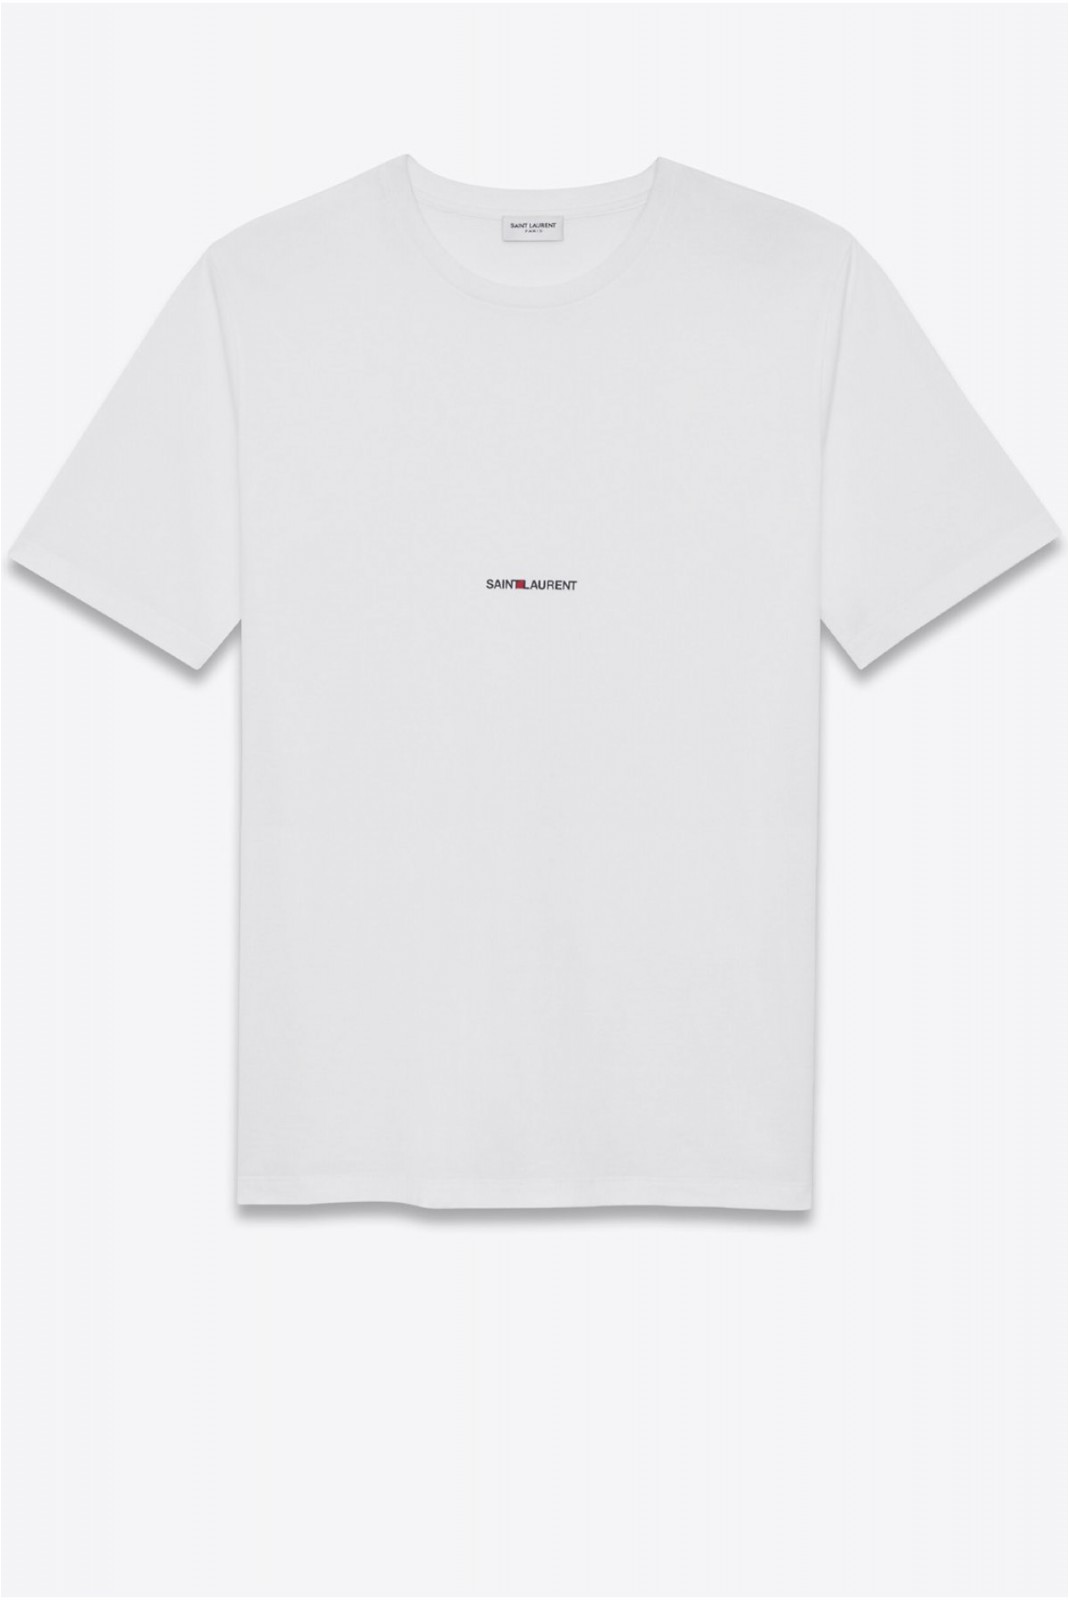 TShirt regular 100% coton print logo Yves Saint Laurent 9000 BLANC BMK464572 YB2DQ